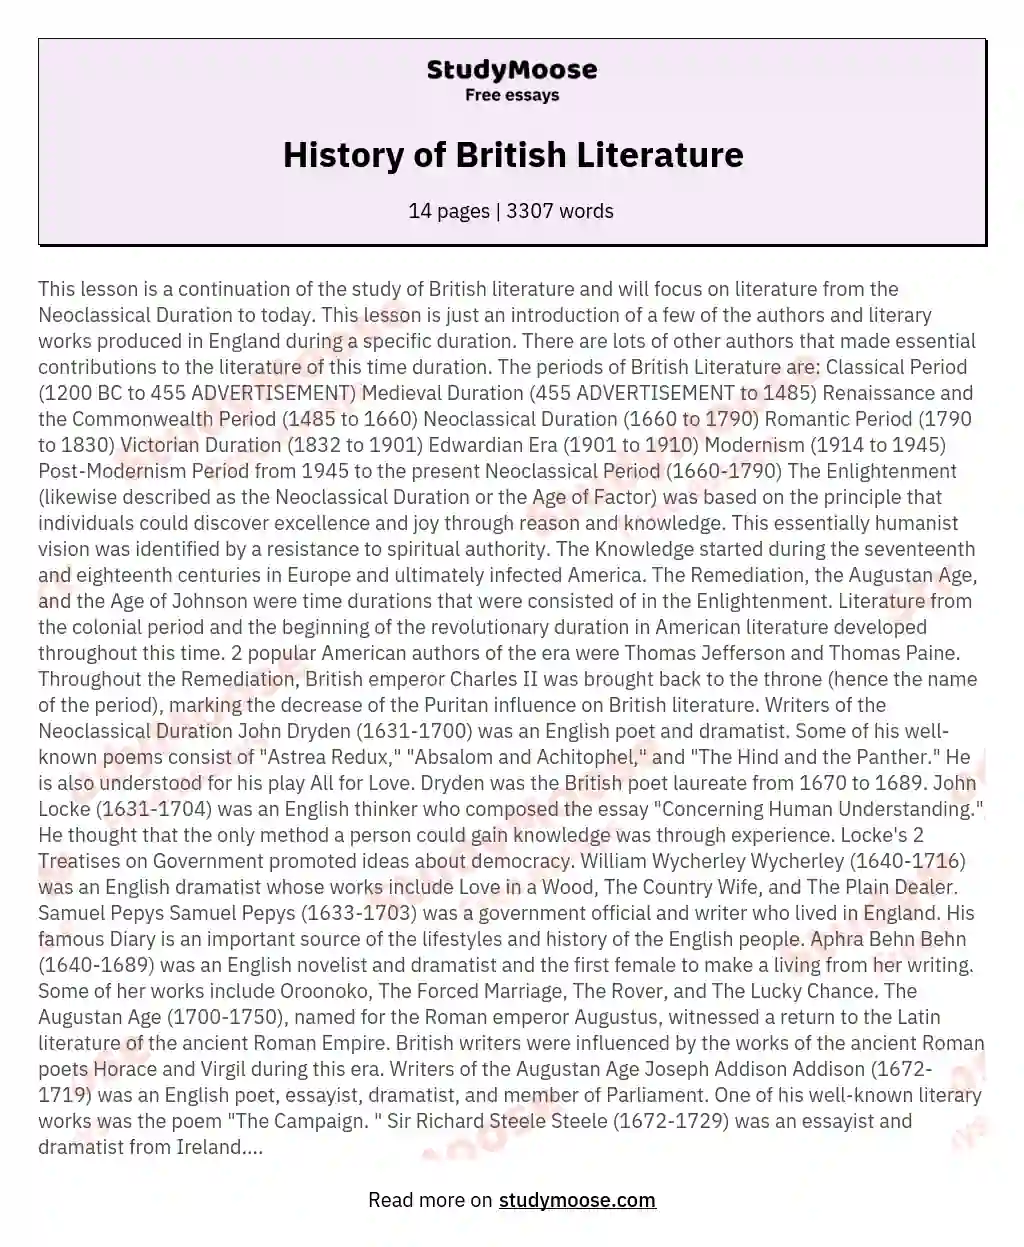 History of British Literature